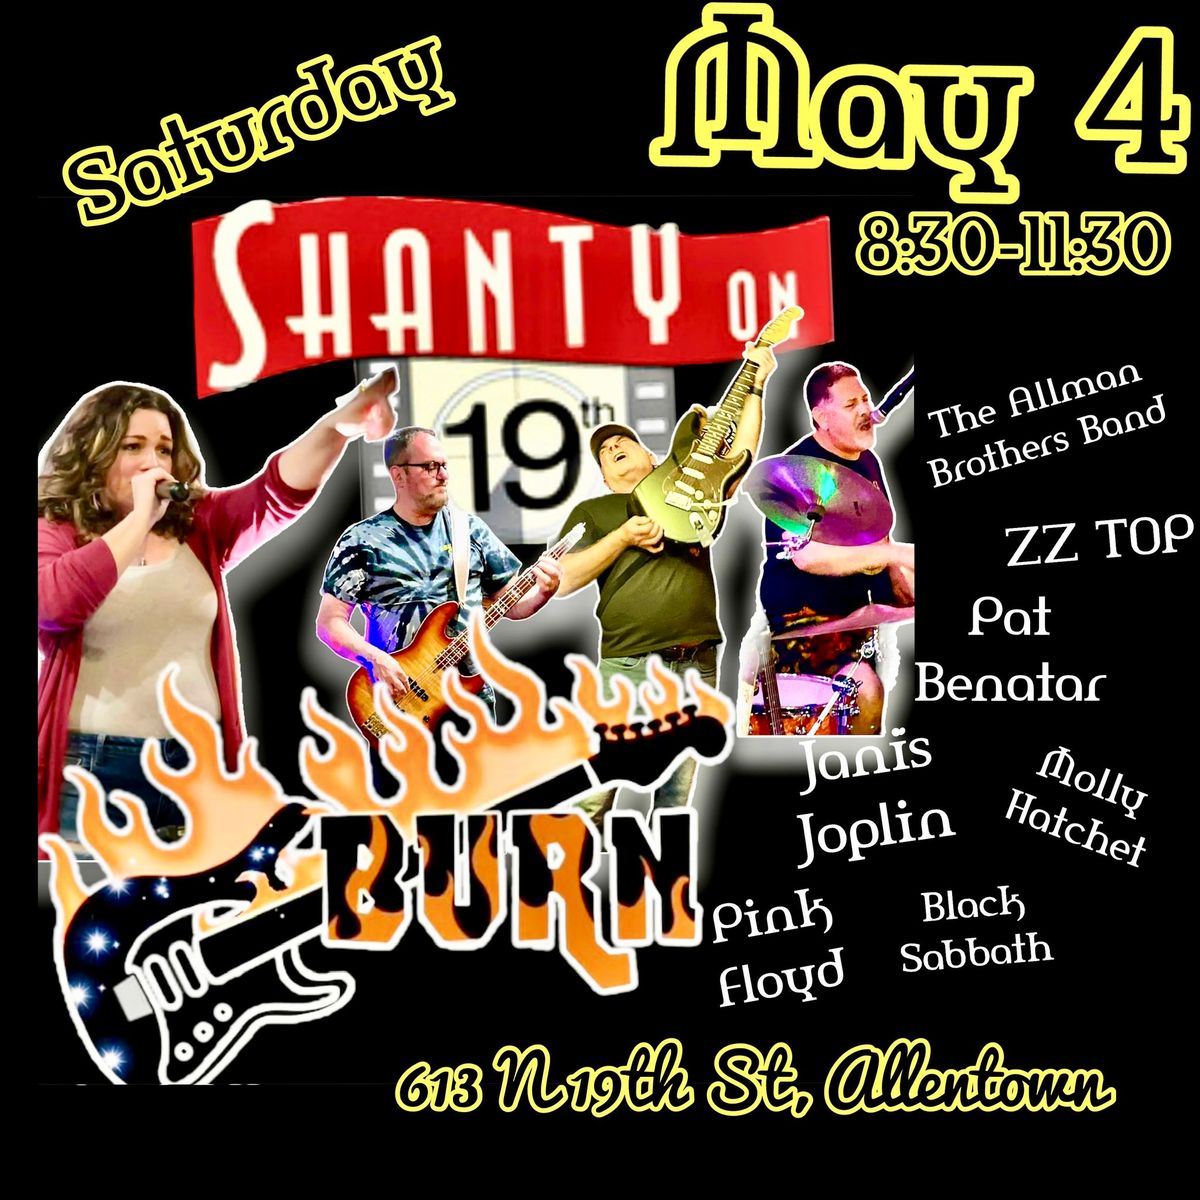 BURN SHAKIN\u2019 the Shanty on 19th street! 